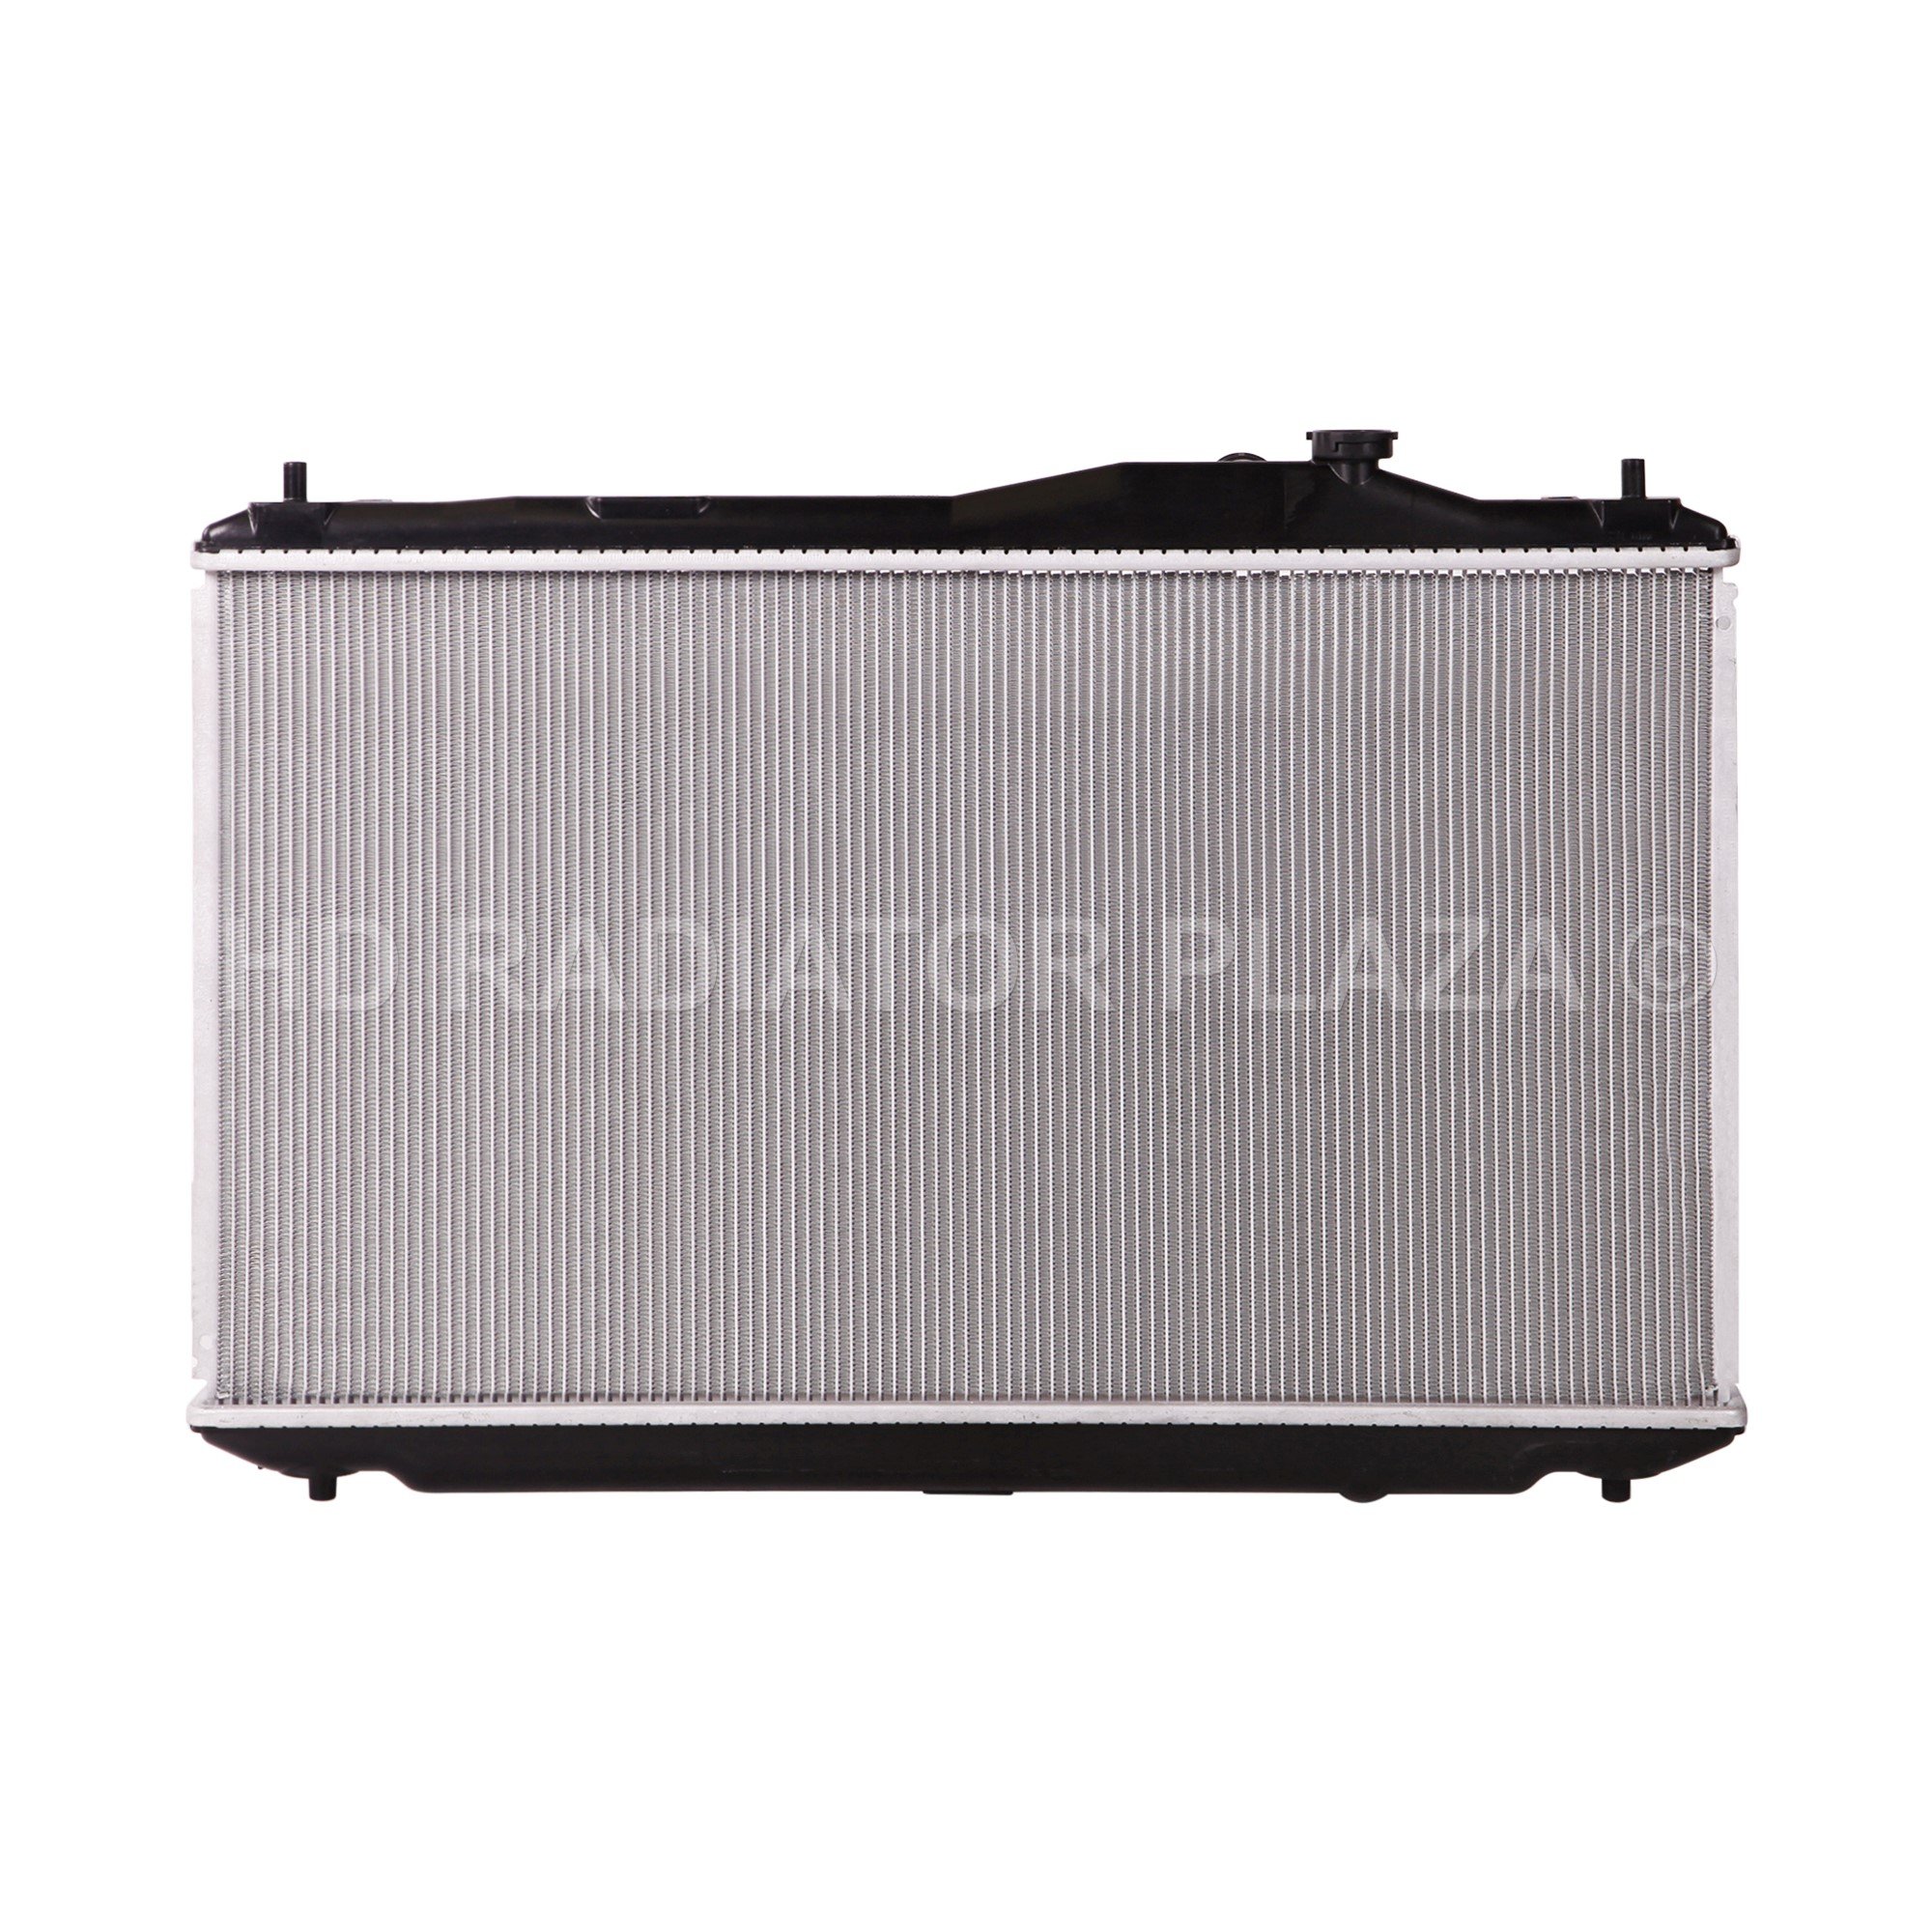 Radiator for 12-15 Honda Civic / Acura ILX